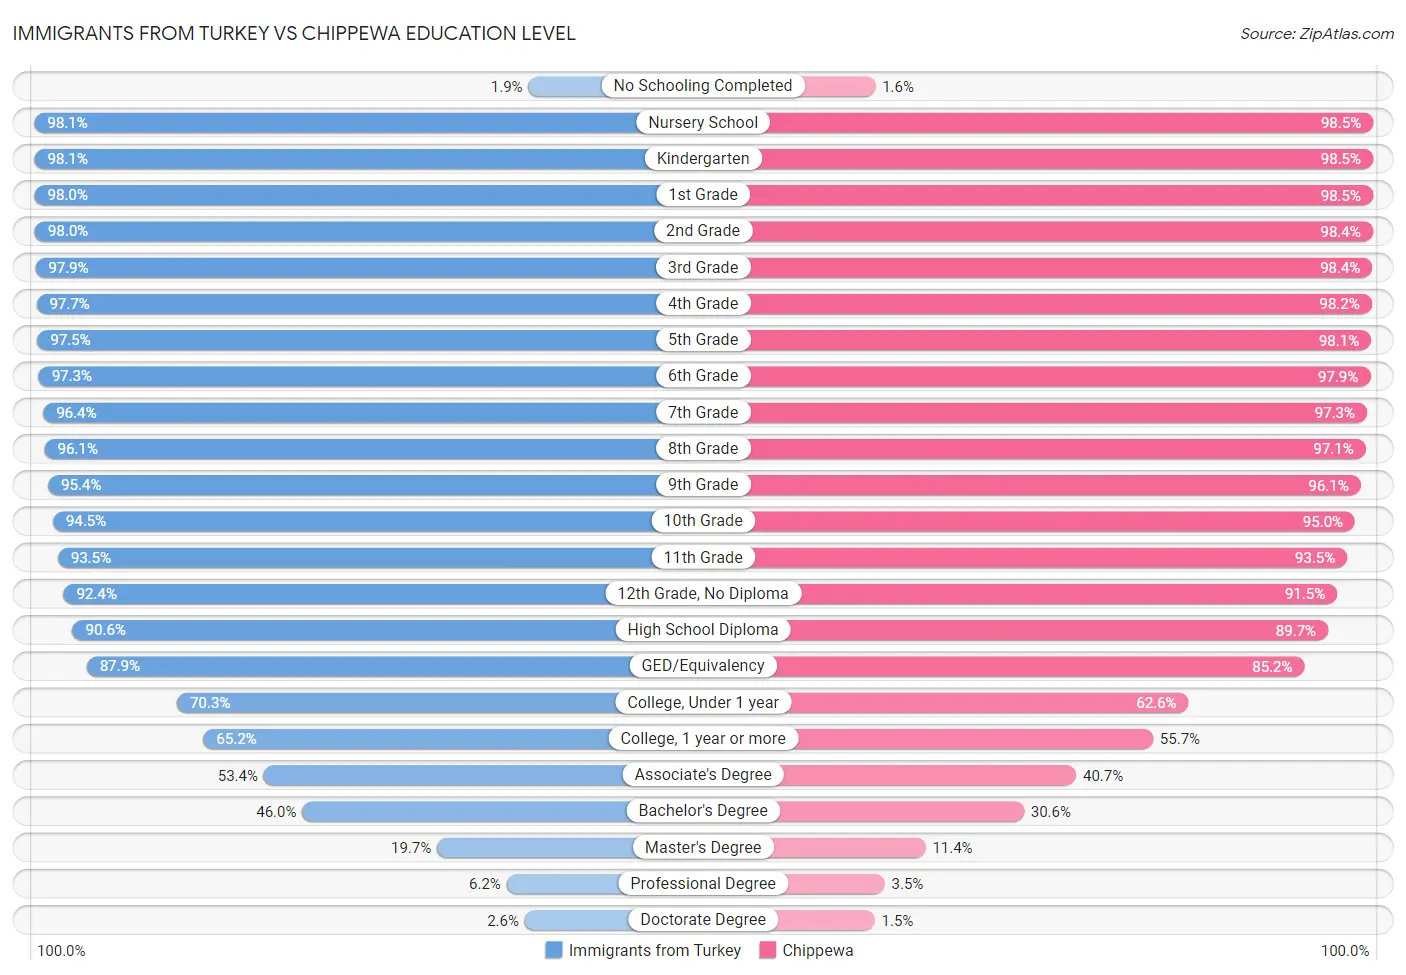 Immigrants from Turkey vs Chippewa Education Level